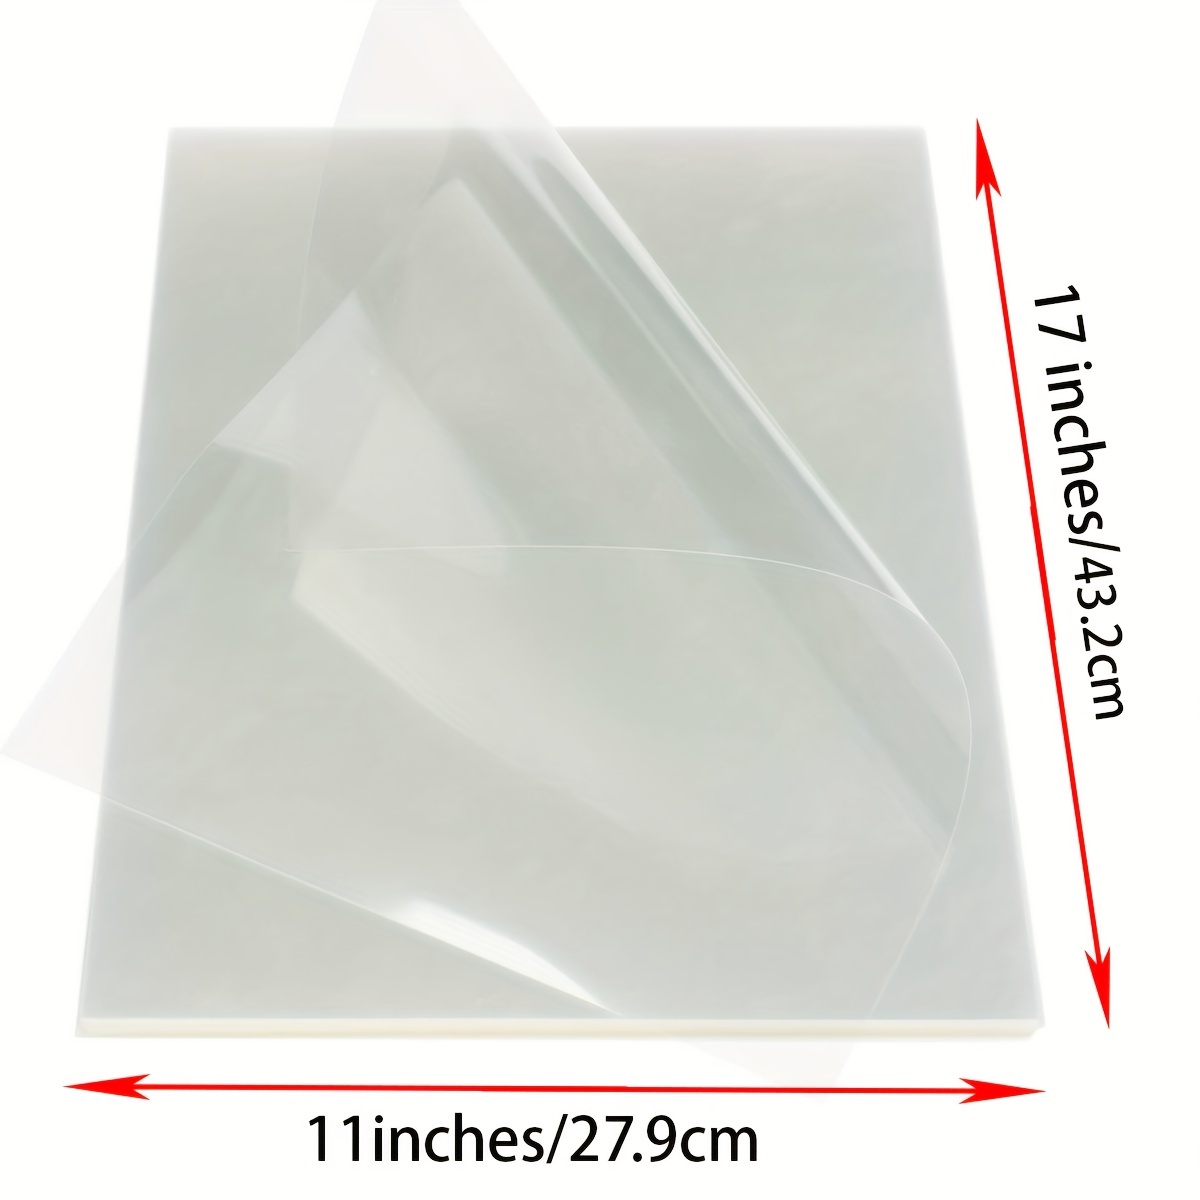 Inkjet Transparency Film, Clear Printer Paper, Overhead